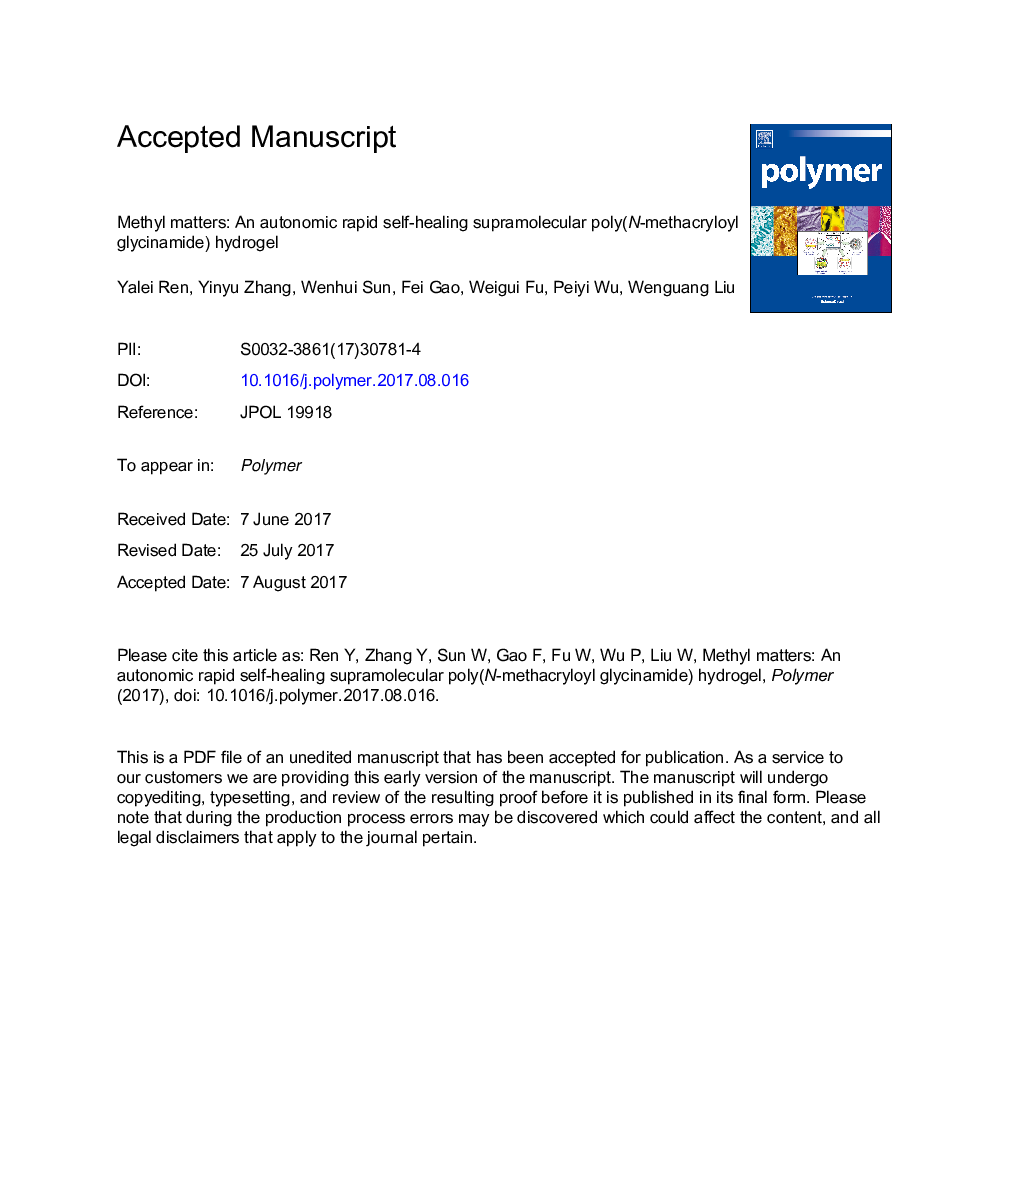 Methyl matters: An autonomic rapid self-healing supramolecular poly(N-methacryloyl glycinamide) hydrogel